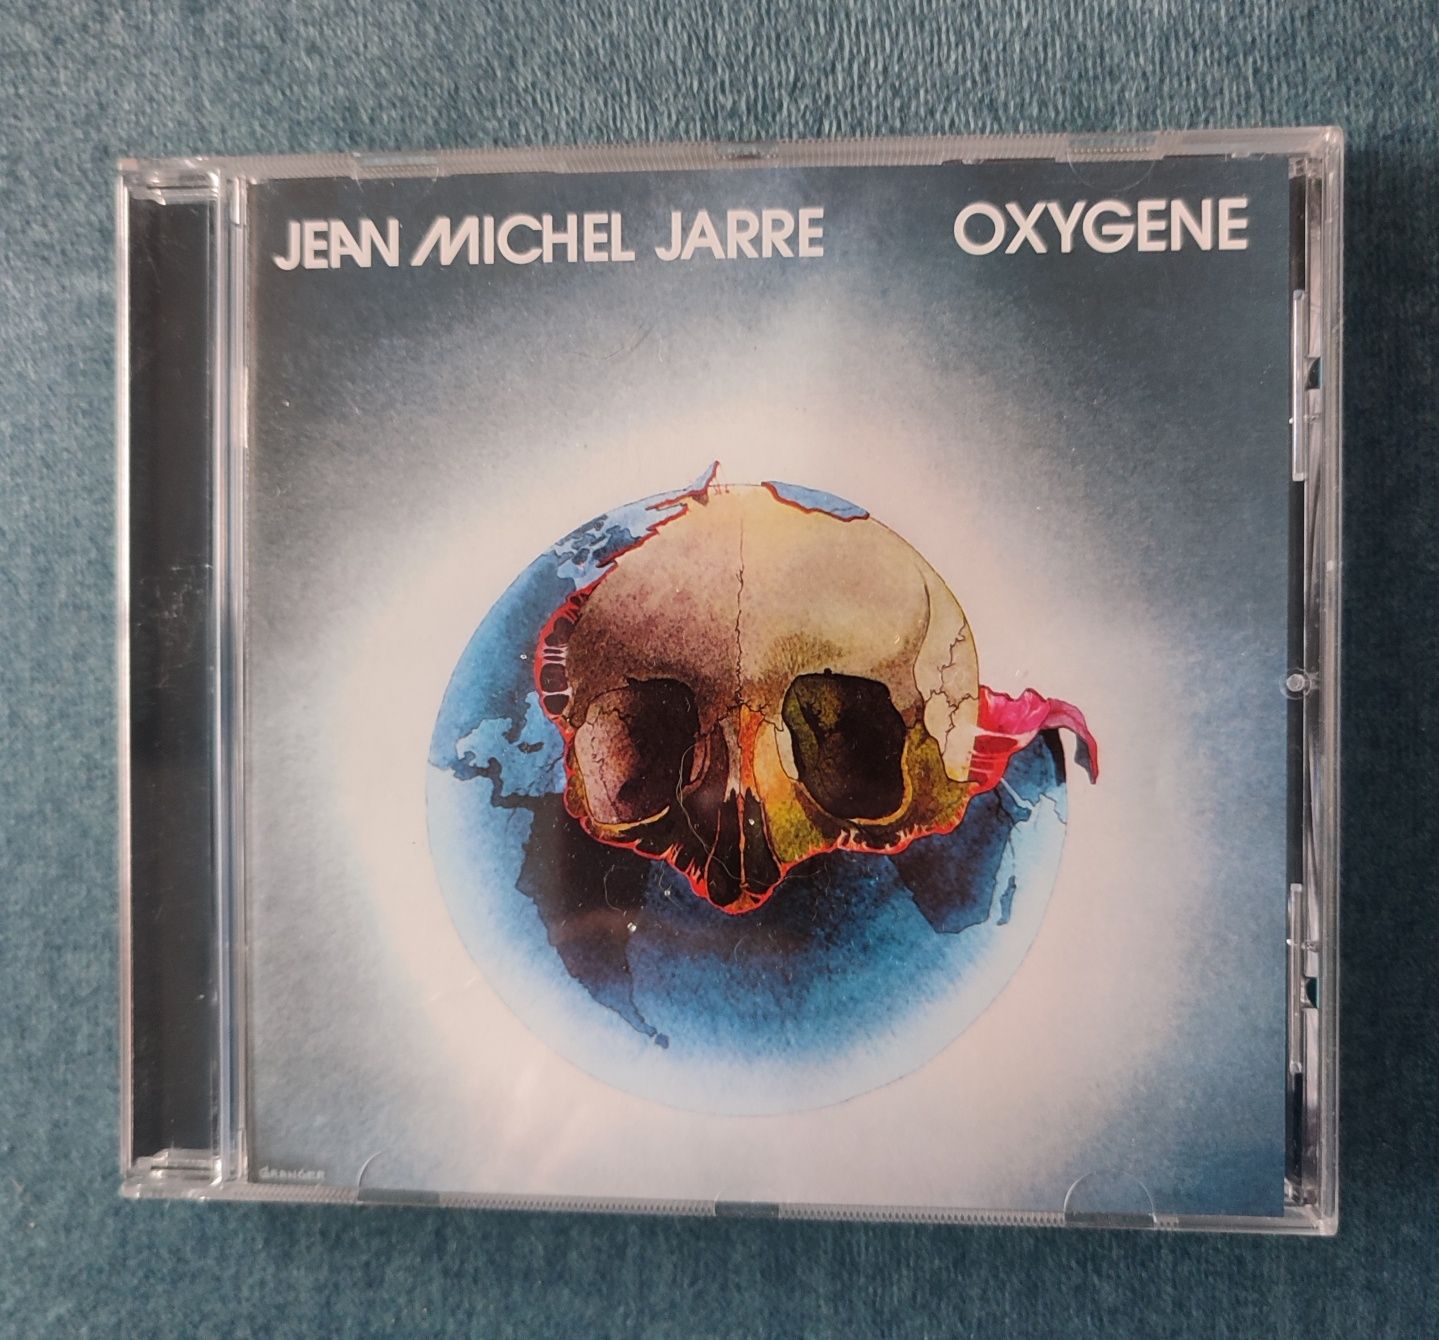 Jean Michel Jarre - Oxygene CD